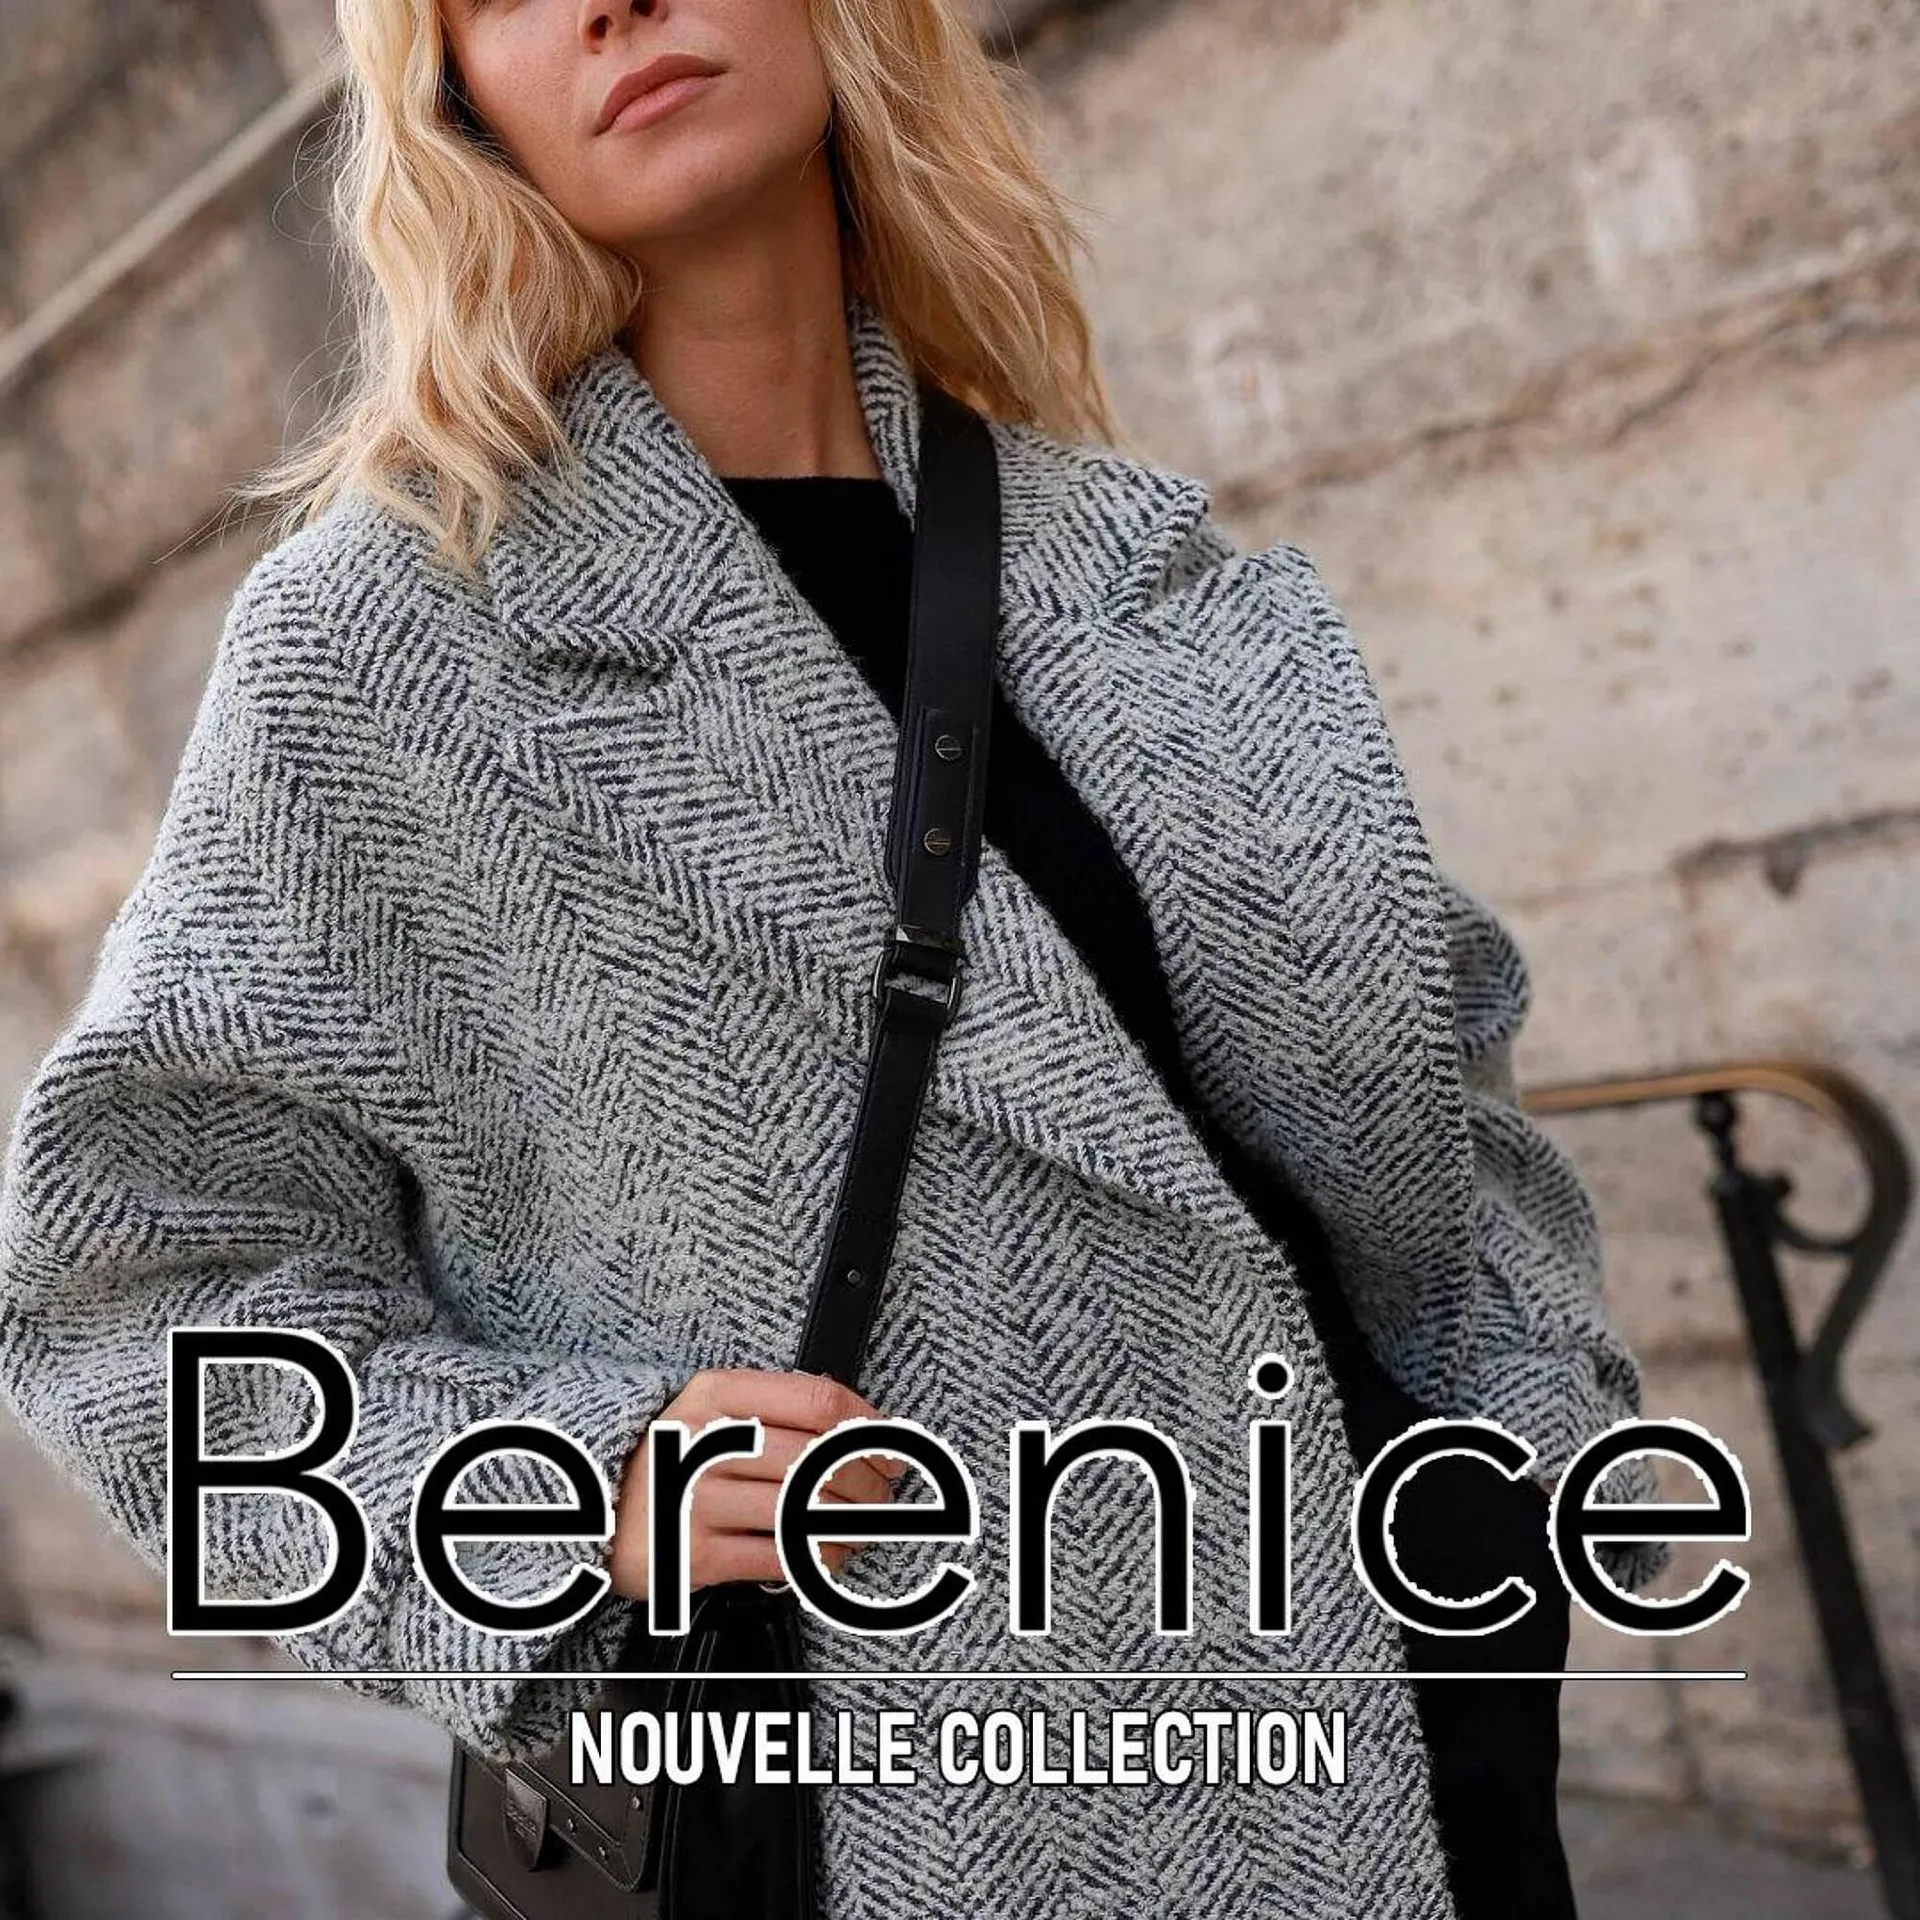 Catalogue Berenice - 1